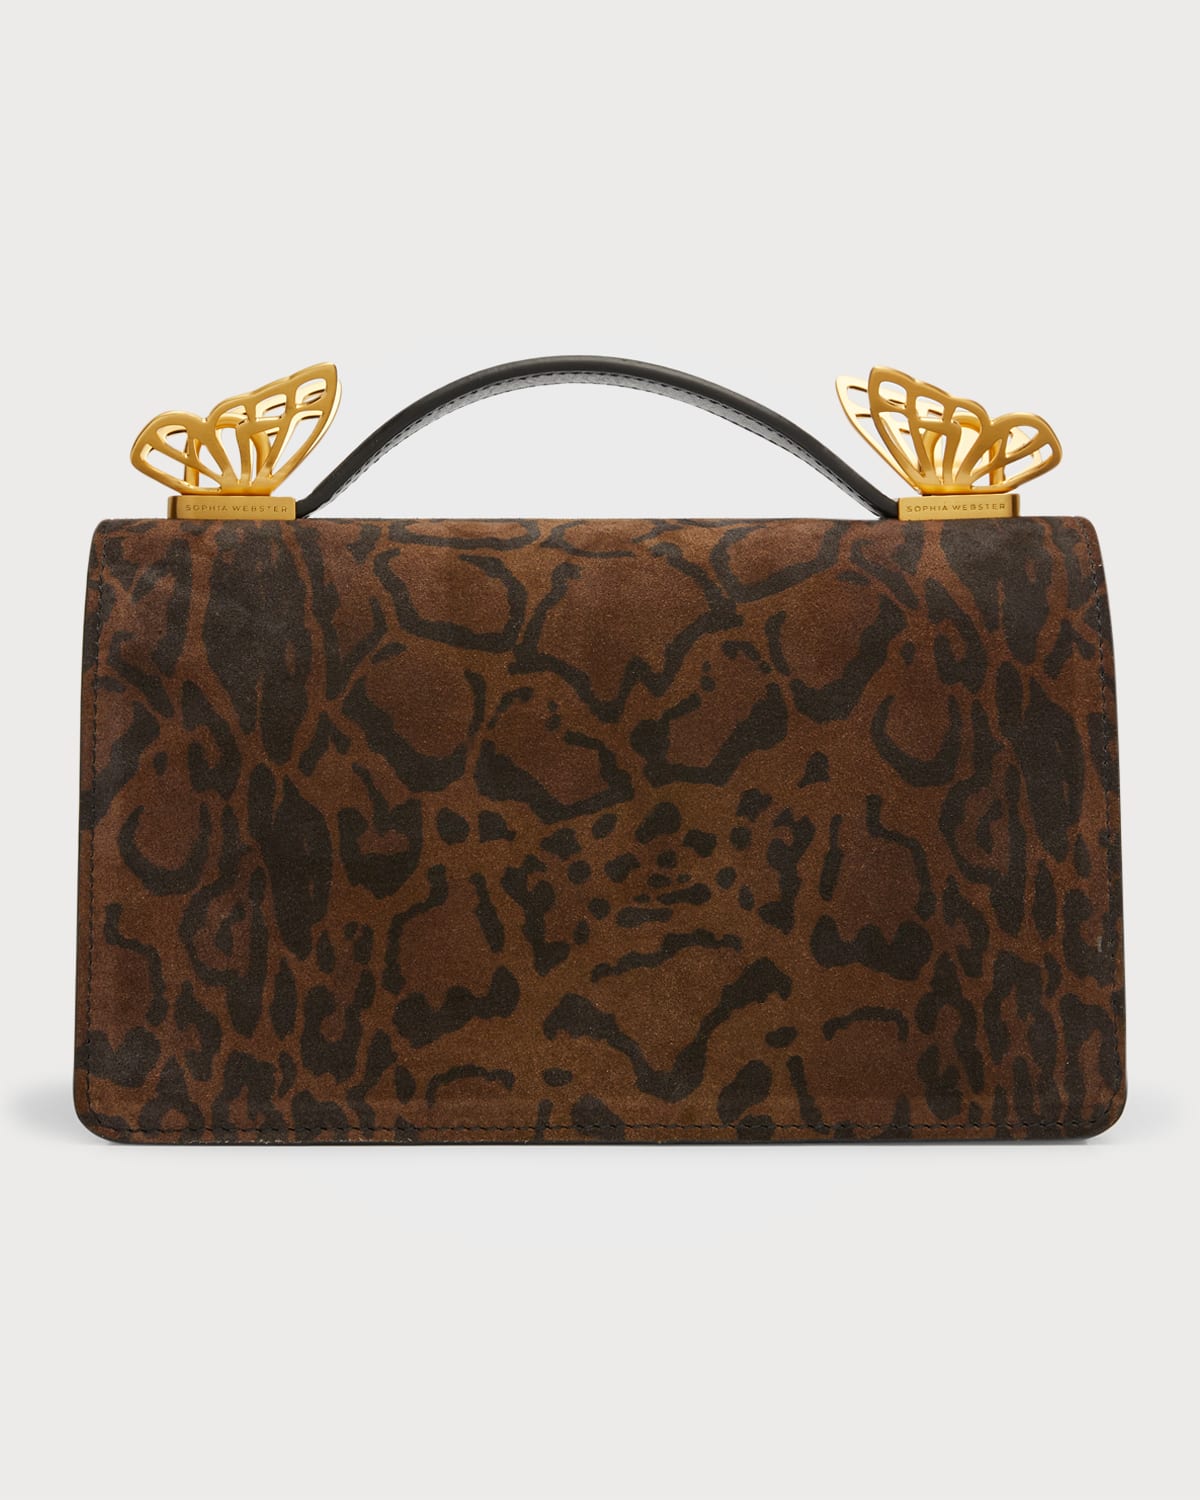 Sophia Webster Mariposa Leopard Suede Top-handle Bag In Black And Leopard